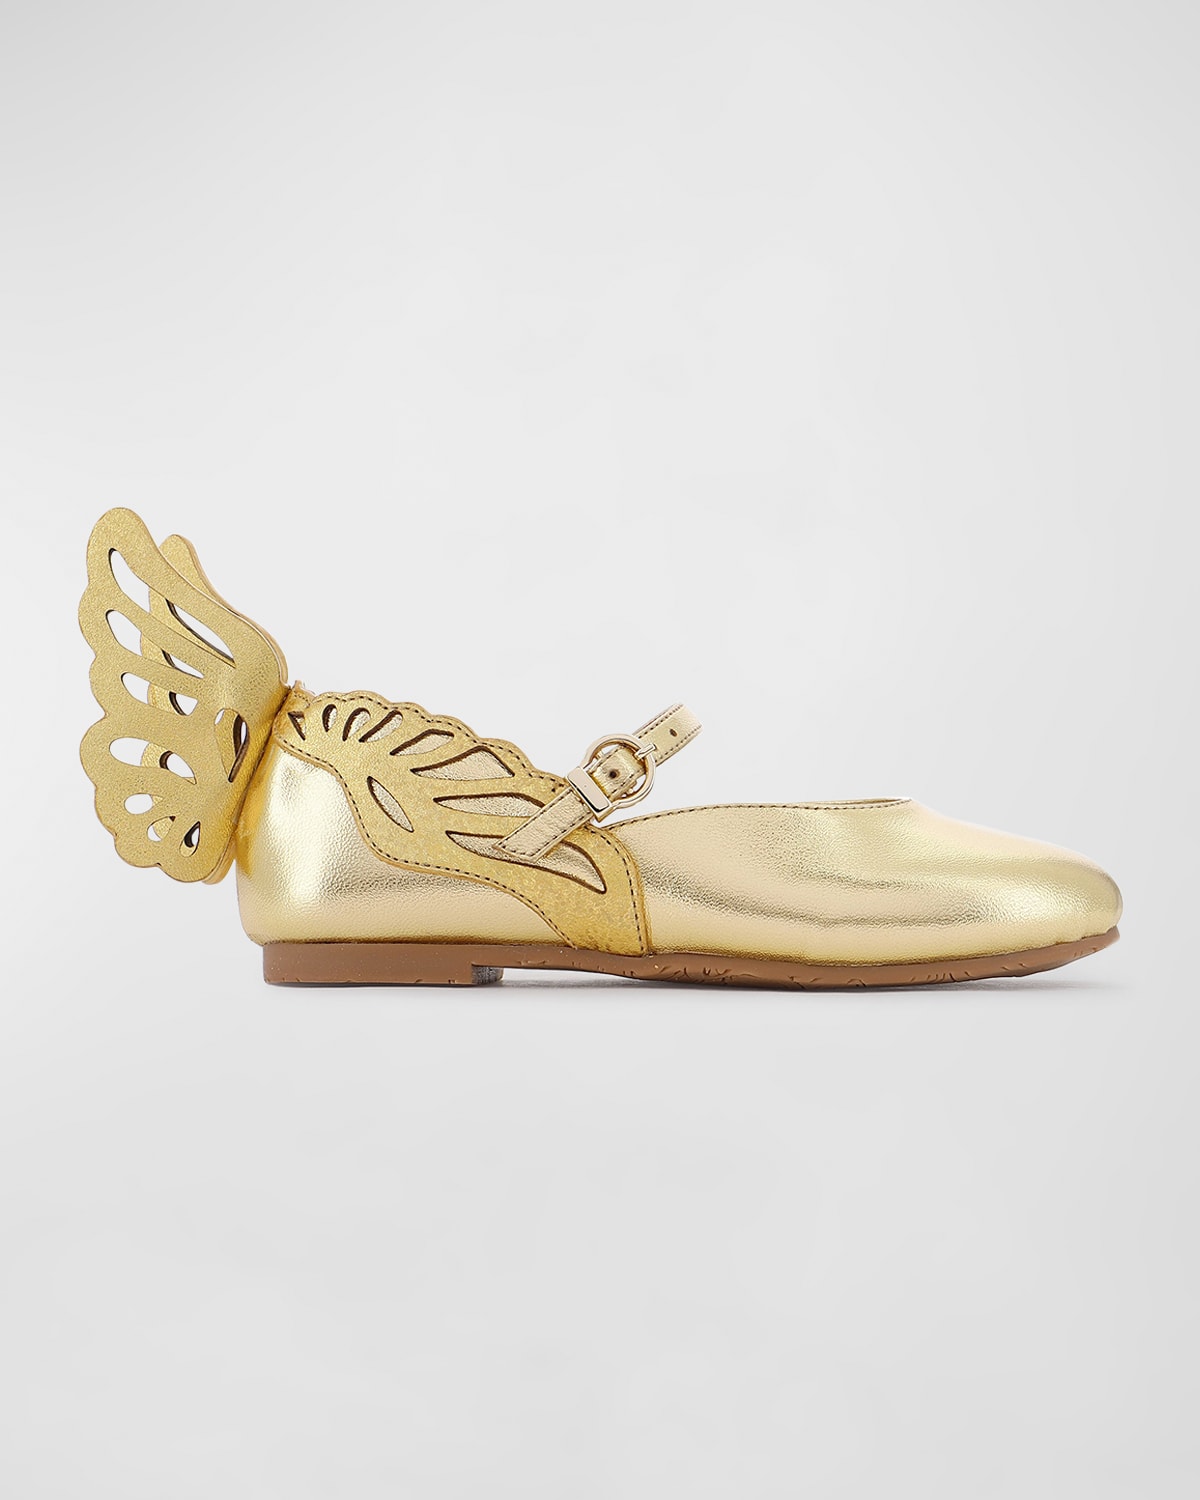 Sophia Webster Girl's Heavenly Flat Glitter Butterfly-wing Flats, Baby/toddlers/kids In Gold